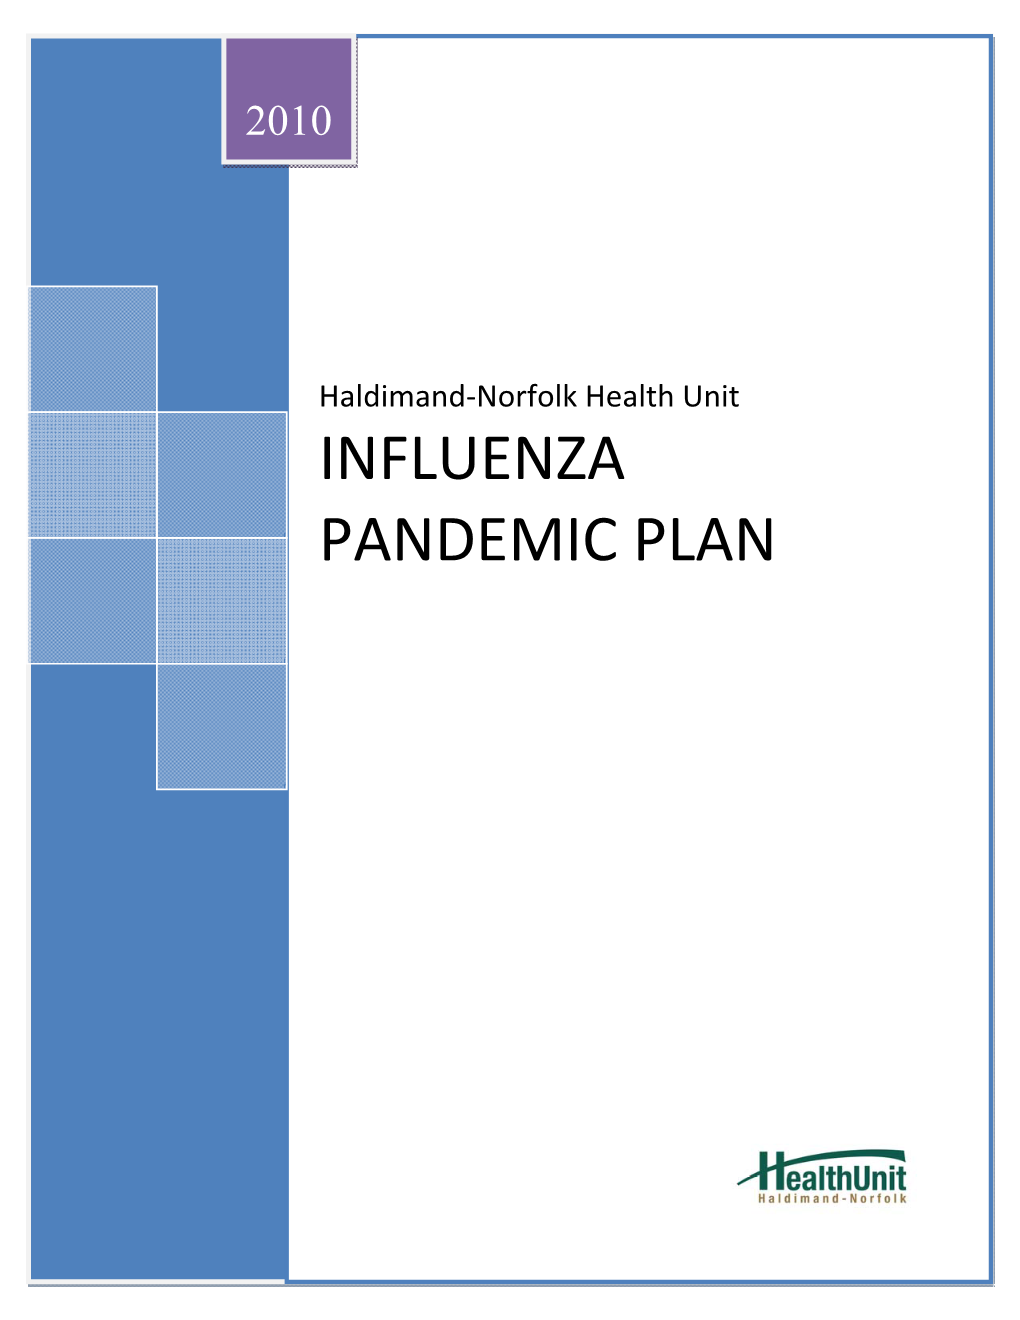 Haldimand-Norfolk Health Unit Activities